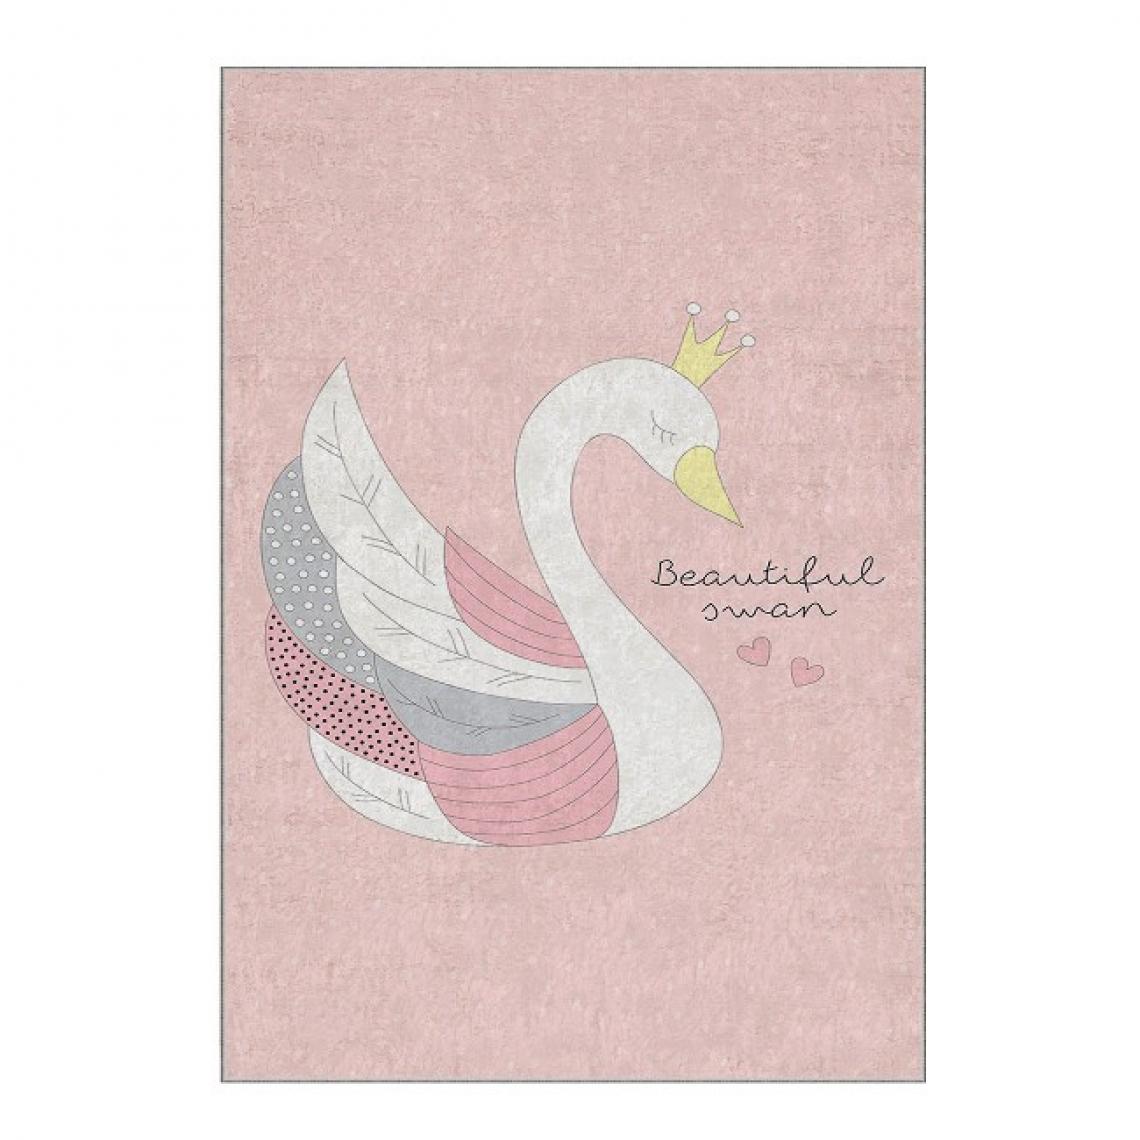 Homemania - HOMEMANIA Tapis pour enfants Swan - Rose, Gris, Blanc - 140 x 220 cm - Tapis